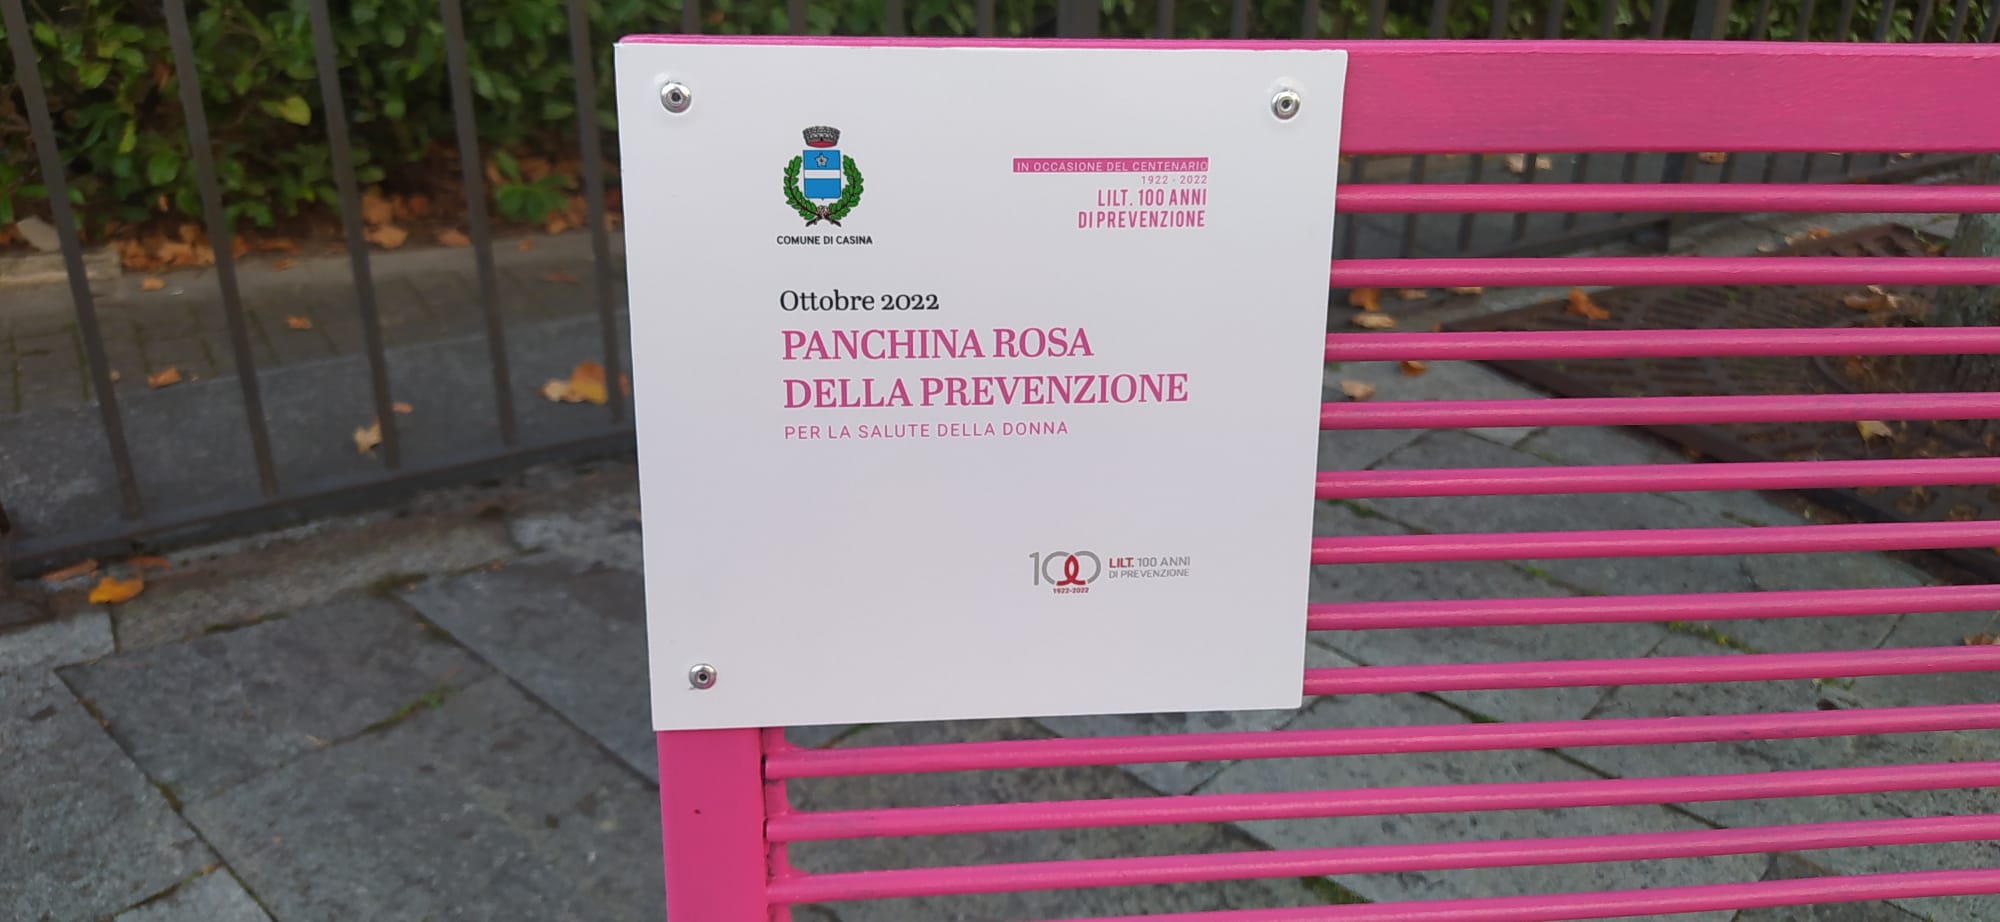 Panchina in rosa a Casina (3)